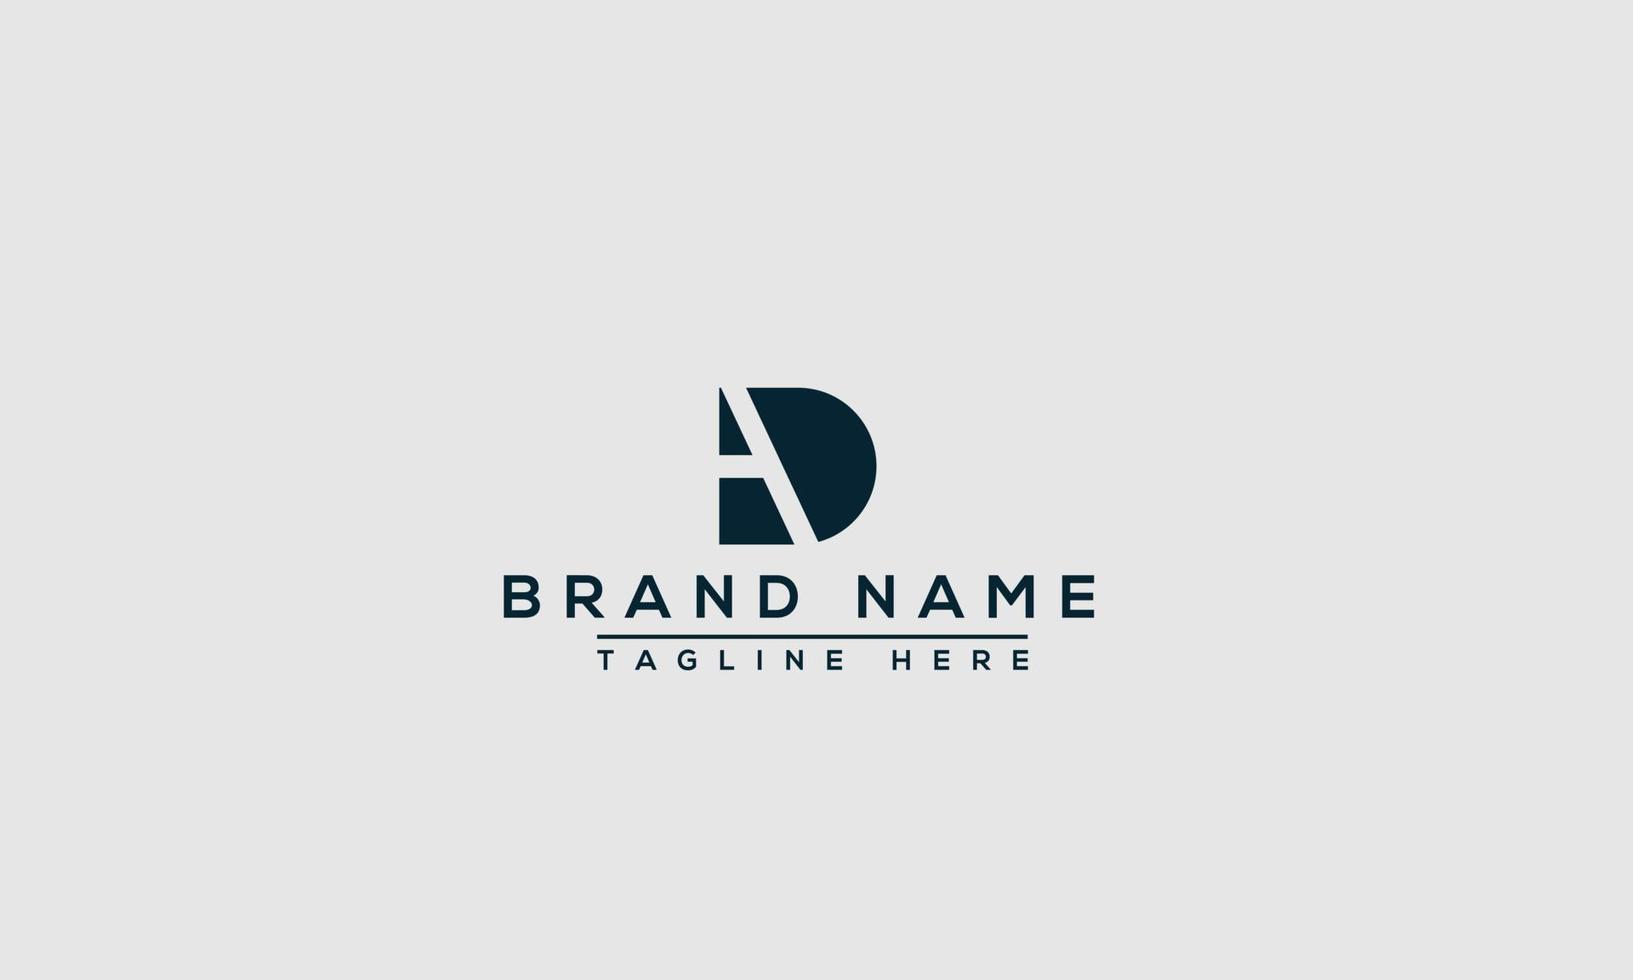 elemento de branding gráfico de vetor de modelo de design de logotipo de anúncio.